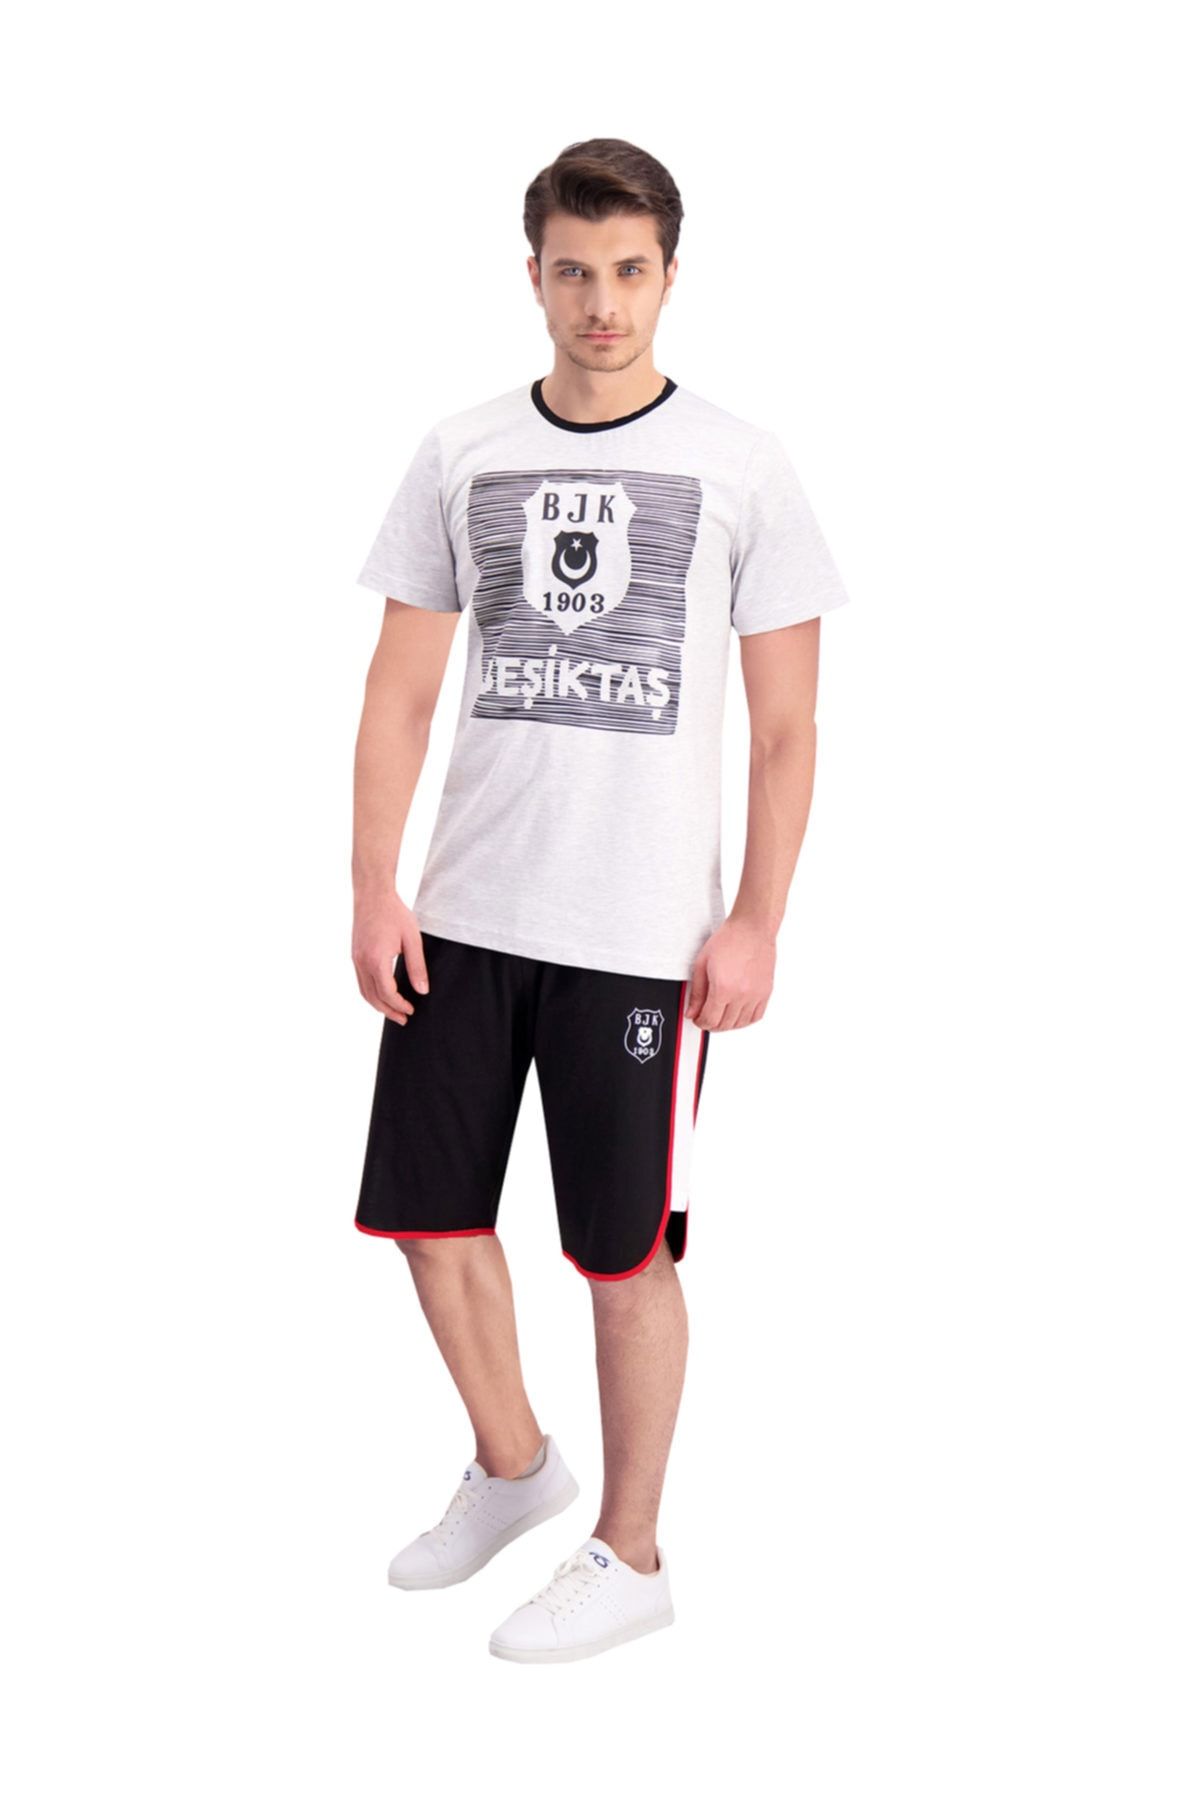 Beşiktaş Beşiktaş T-shirt Takım  -bjk2647